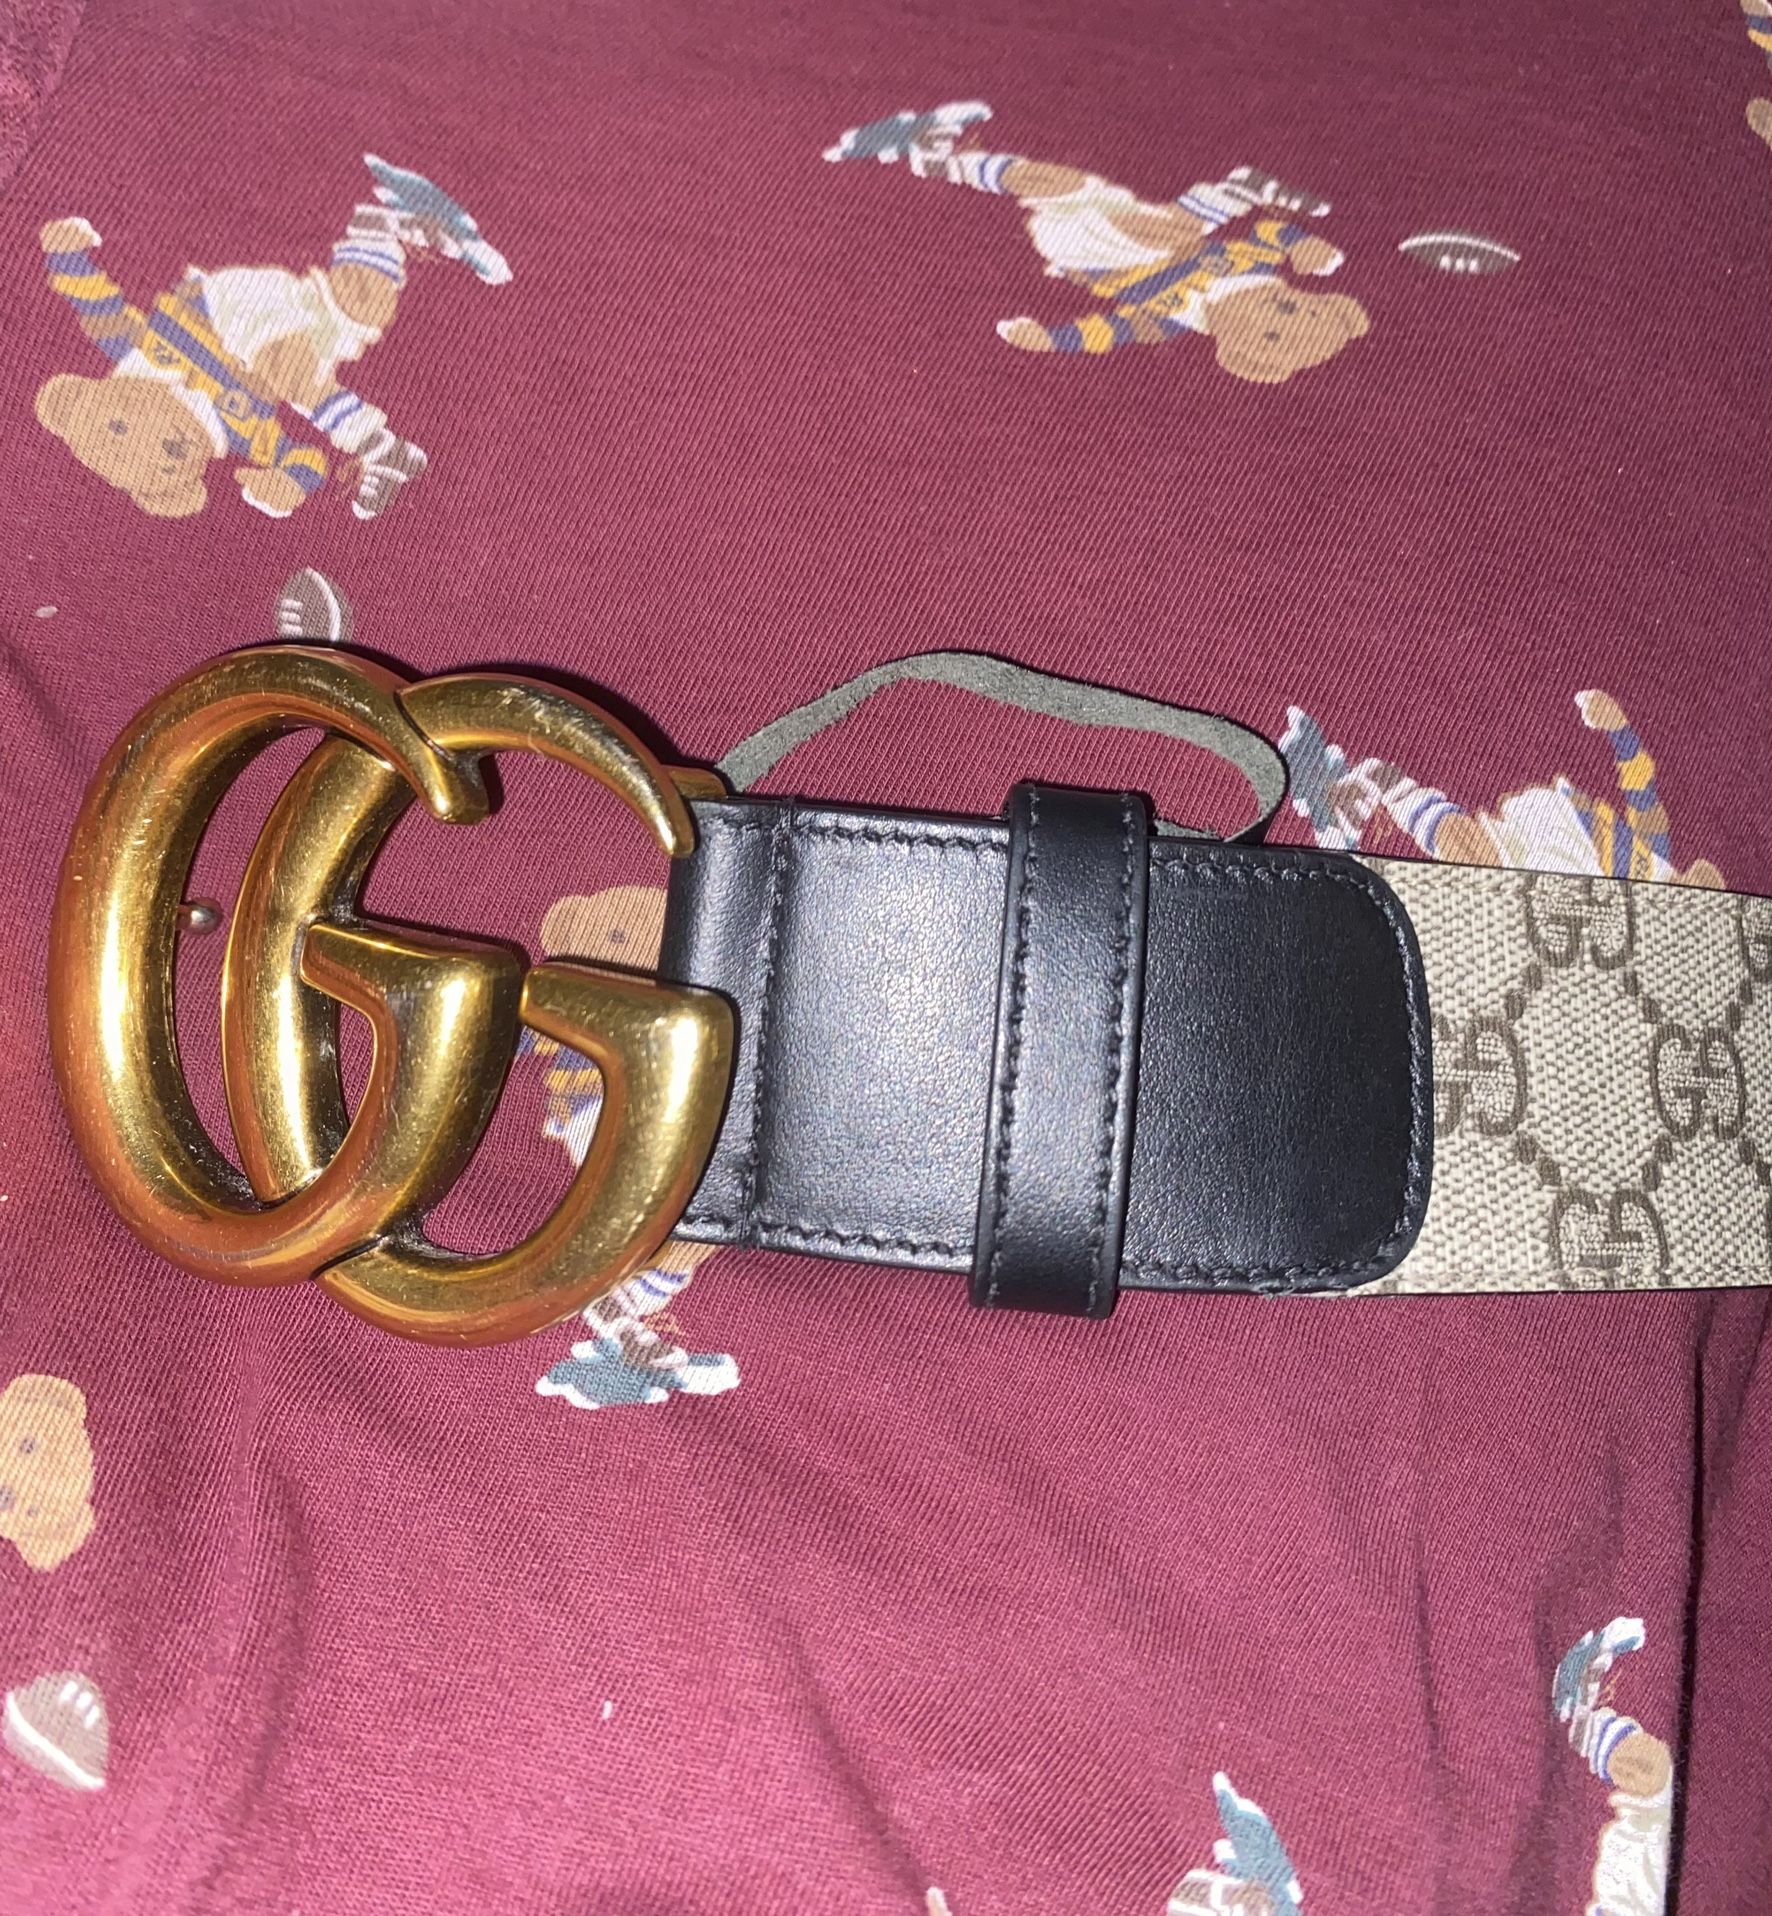 100% authentic gucci belt buckle